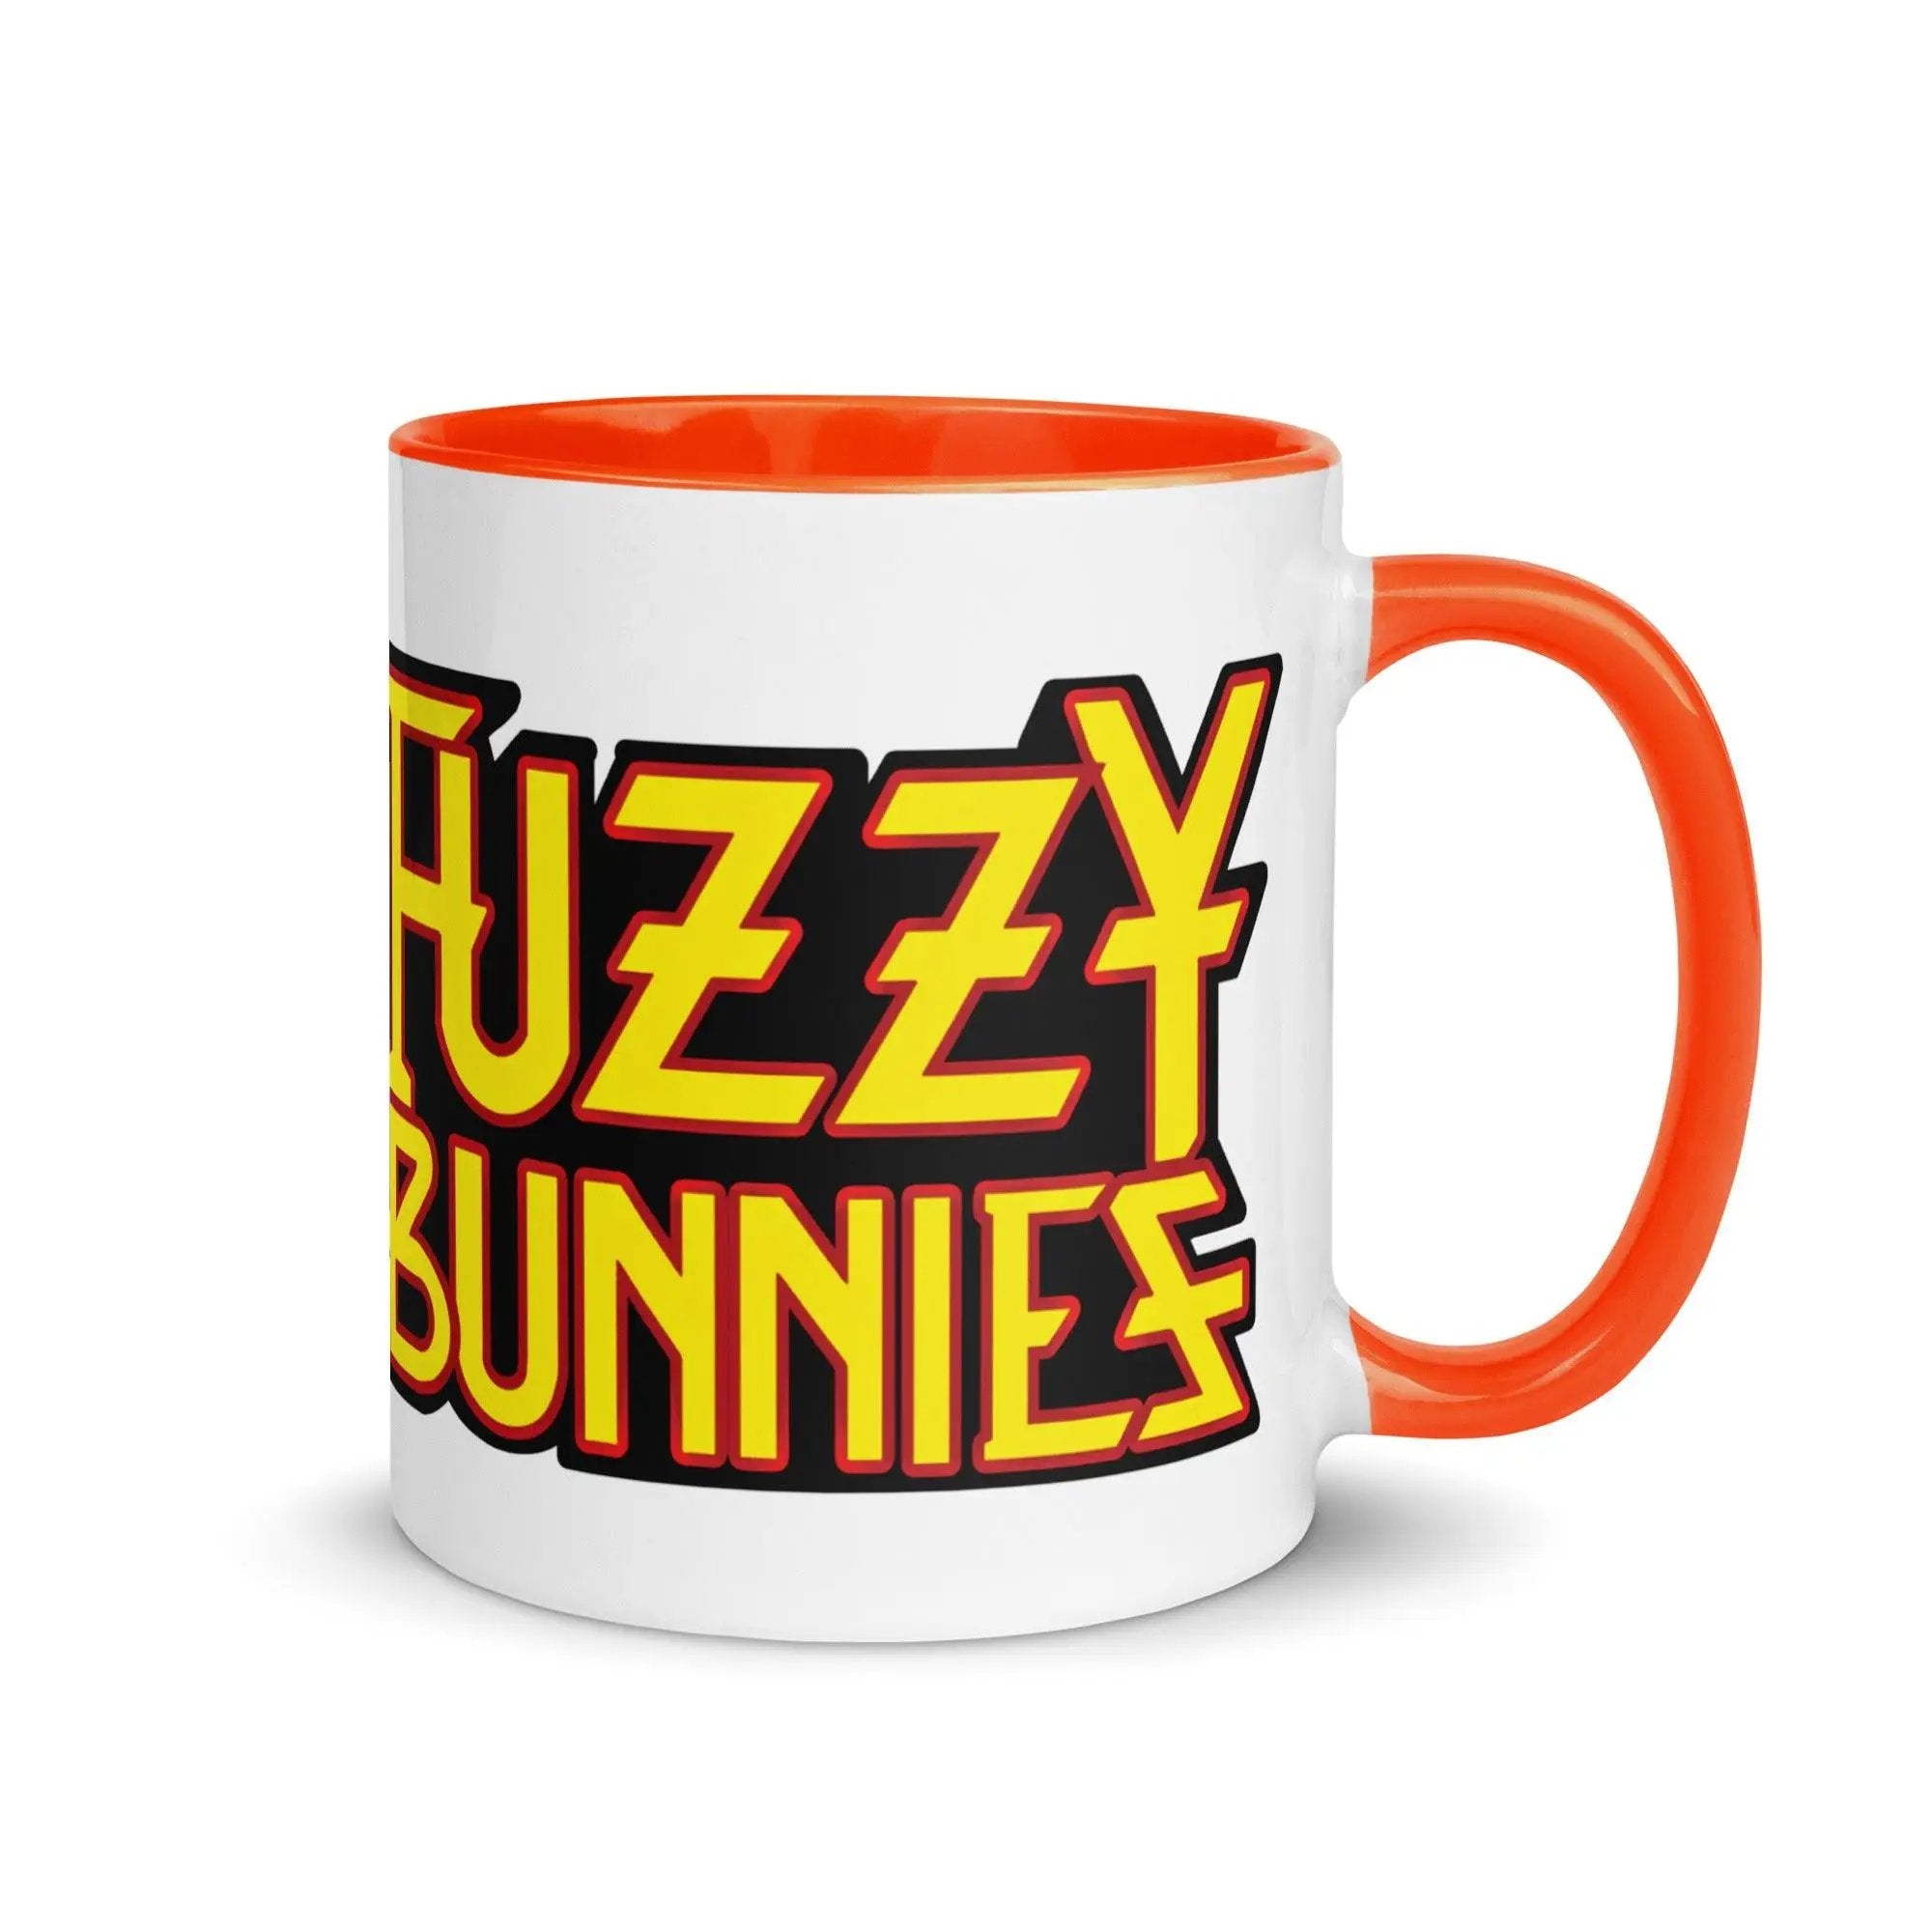 Fuzzy Bunnies Mug with Color Inside